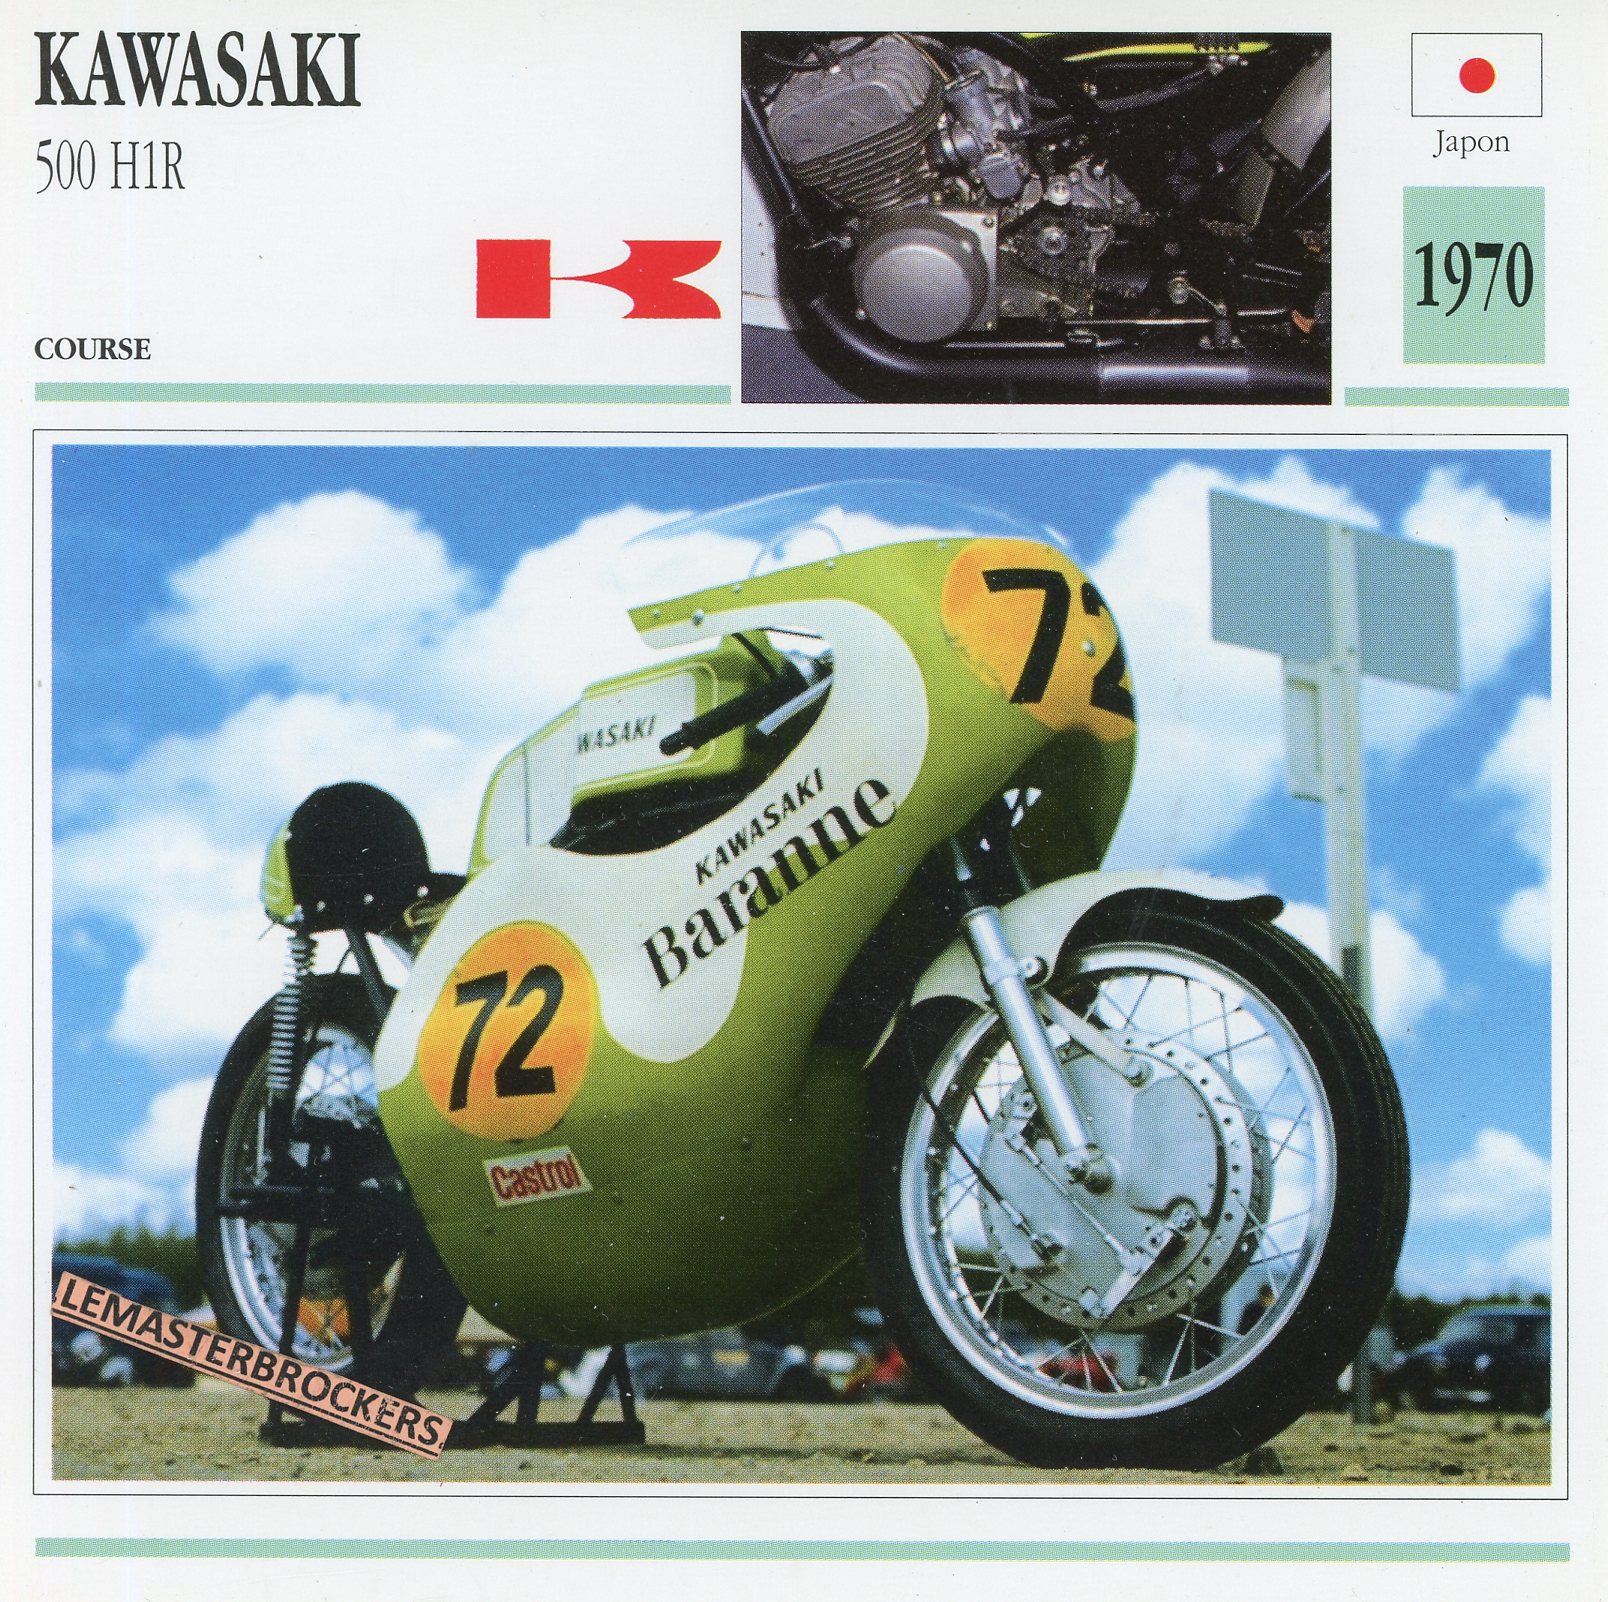 KAWASAKI-500-H1R-1970-FICHE-MOTO-KAWA-LEMASTERBROCKERS